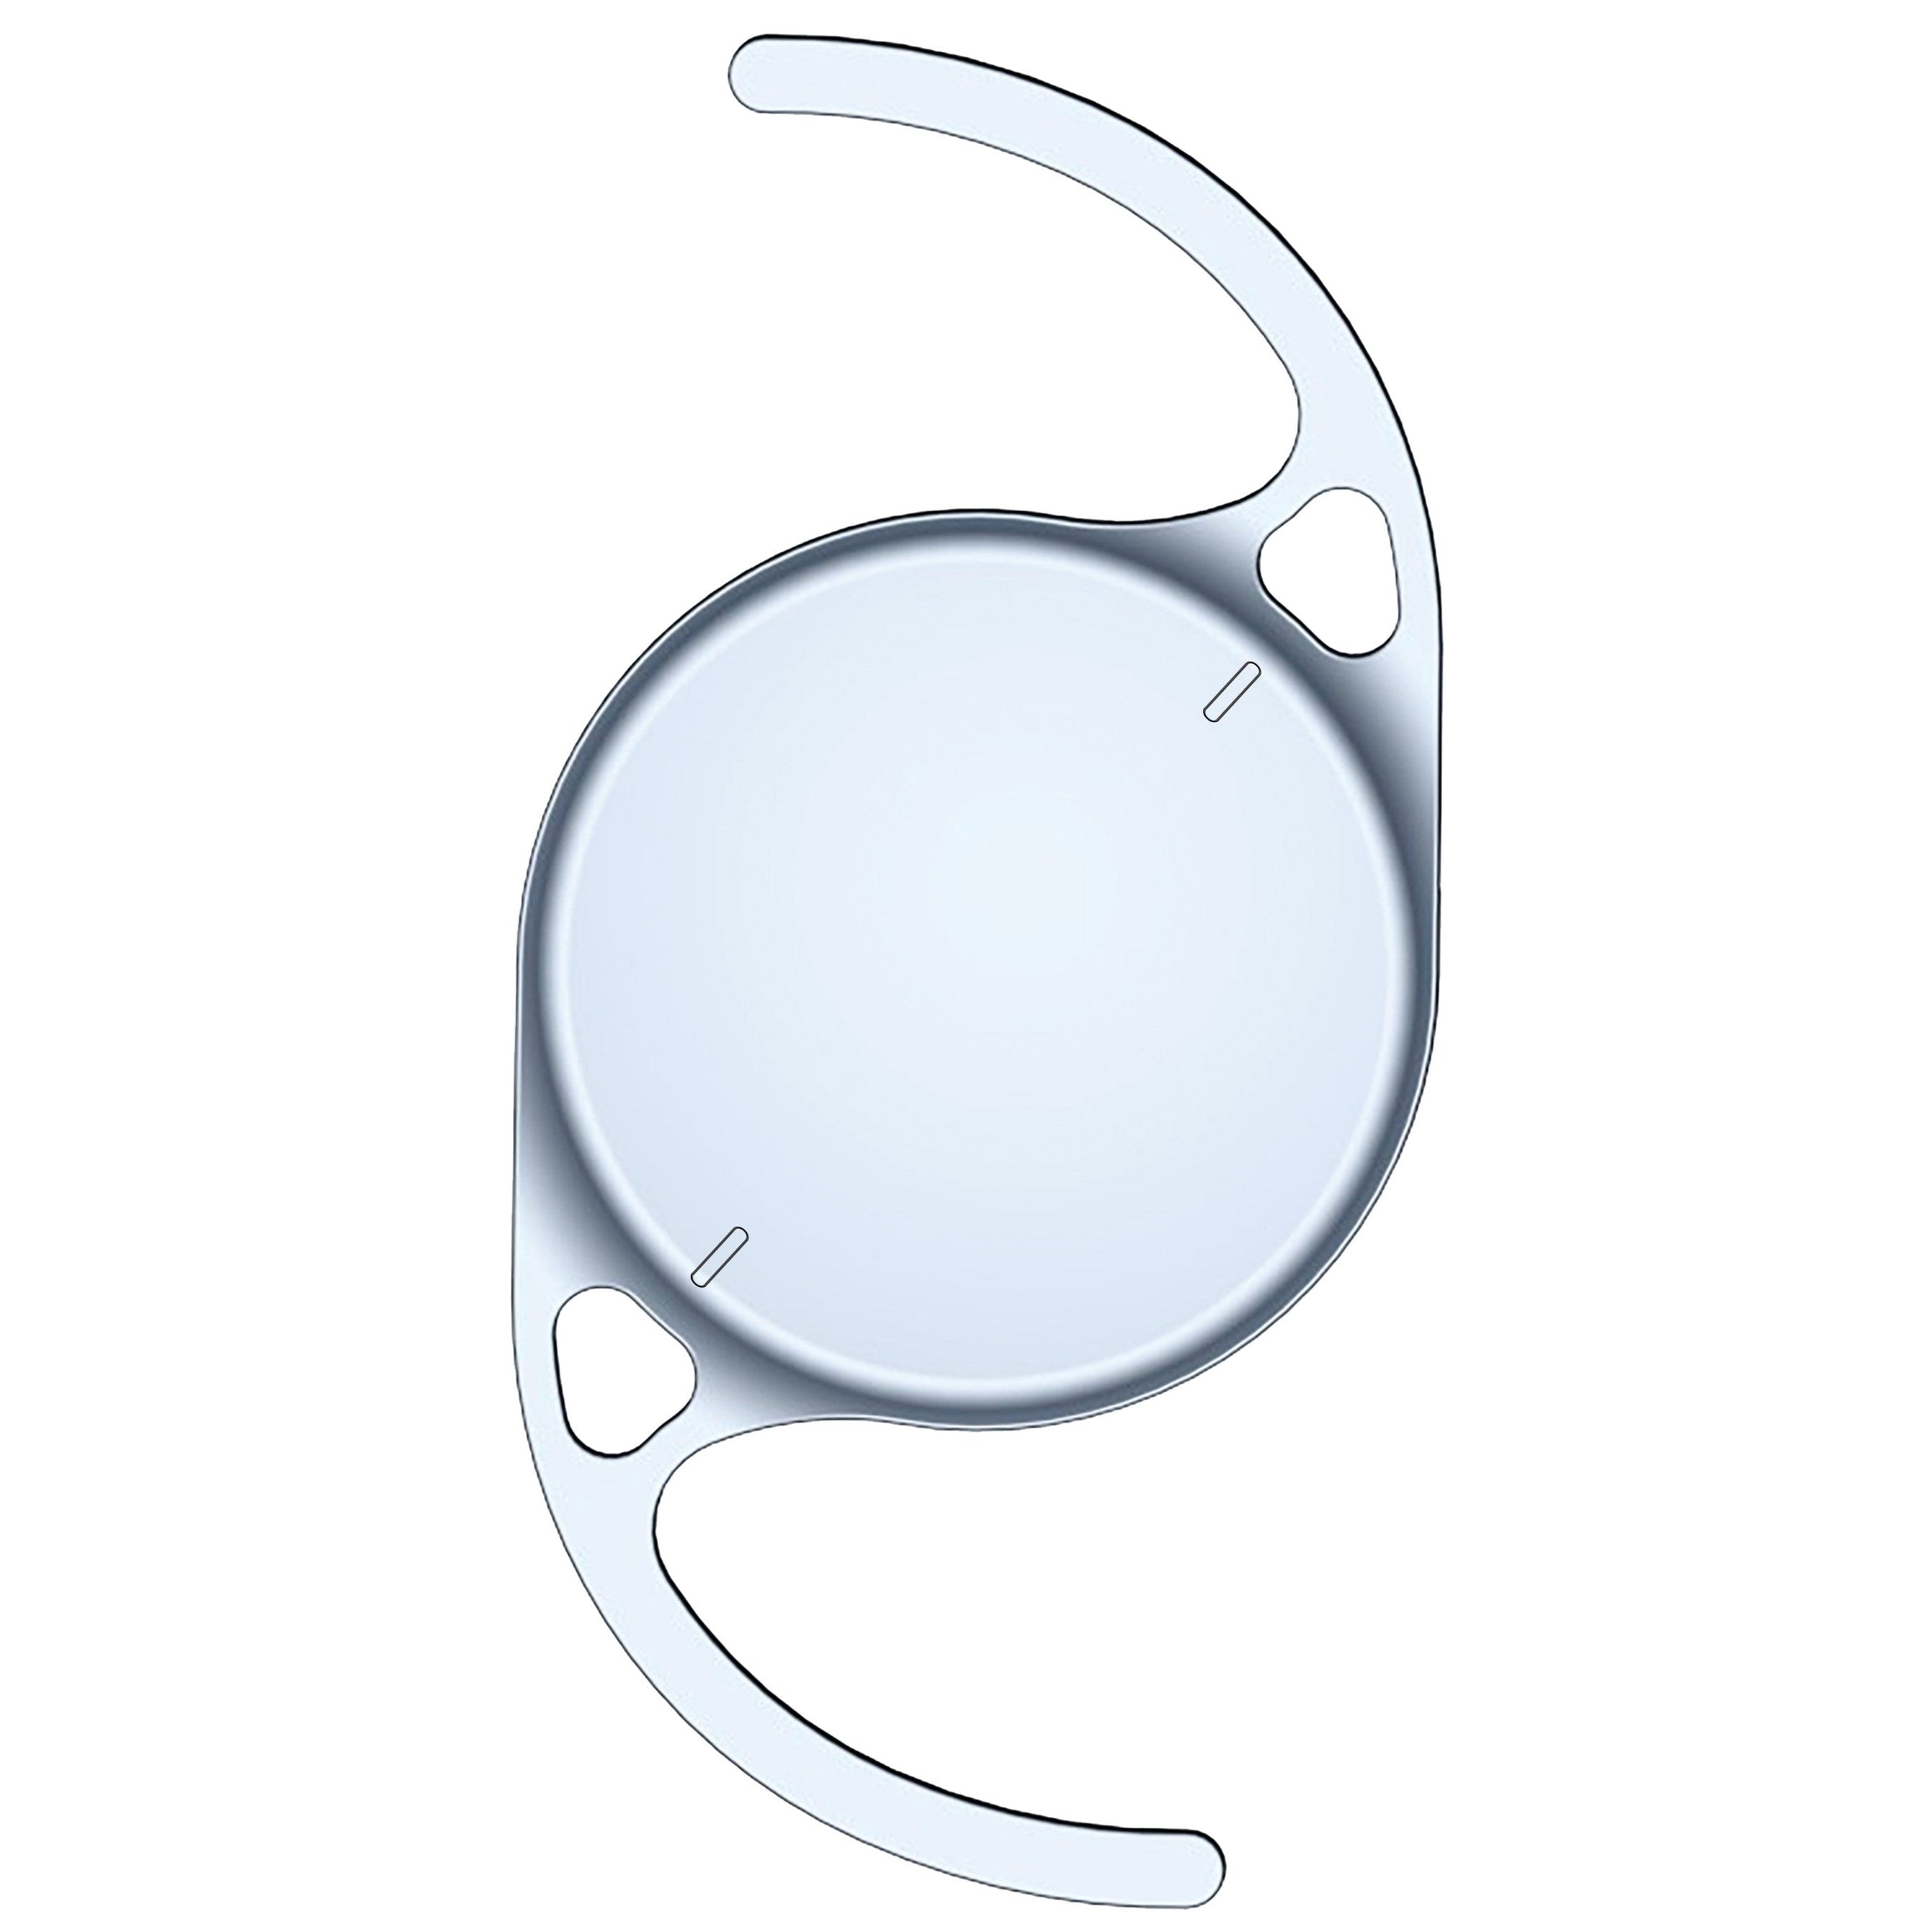 toric intraocular lens to correct astigmatism